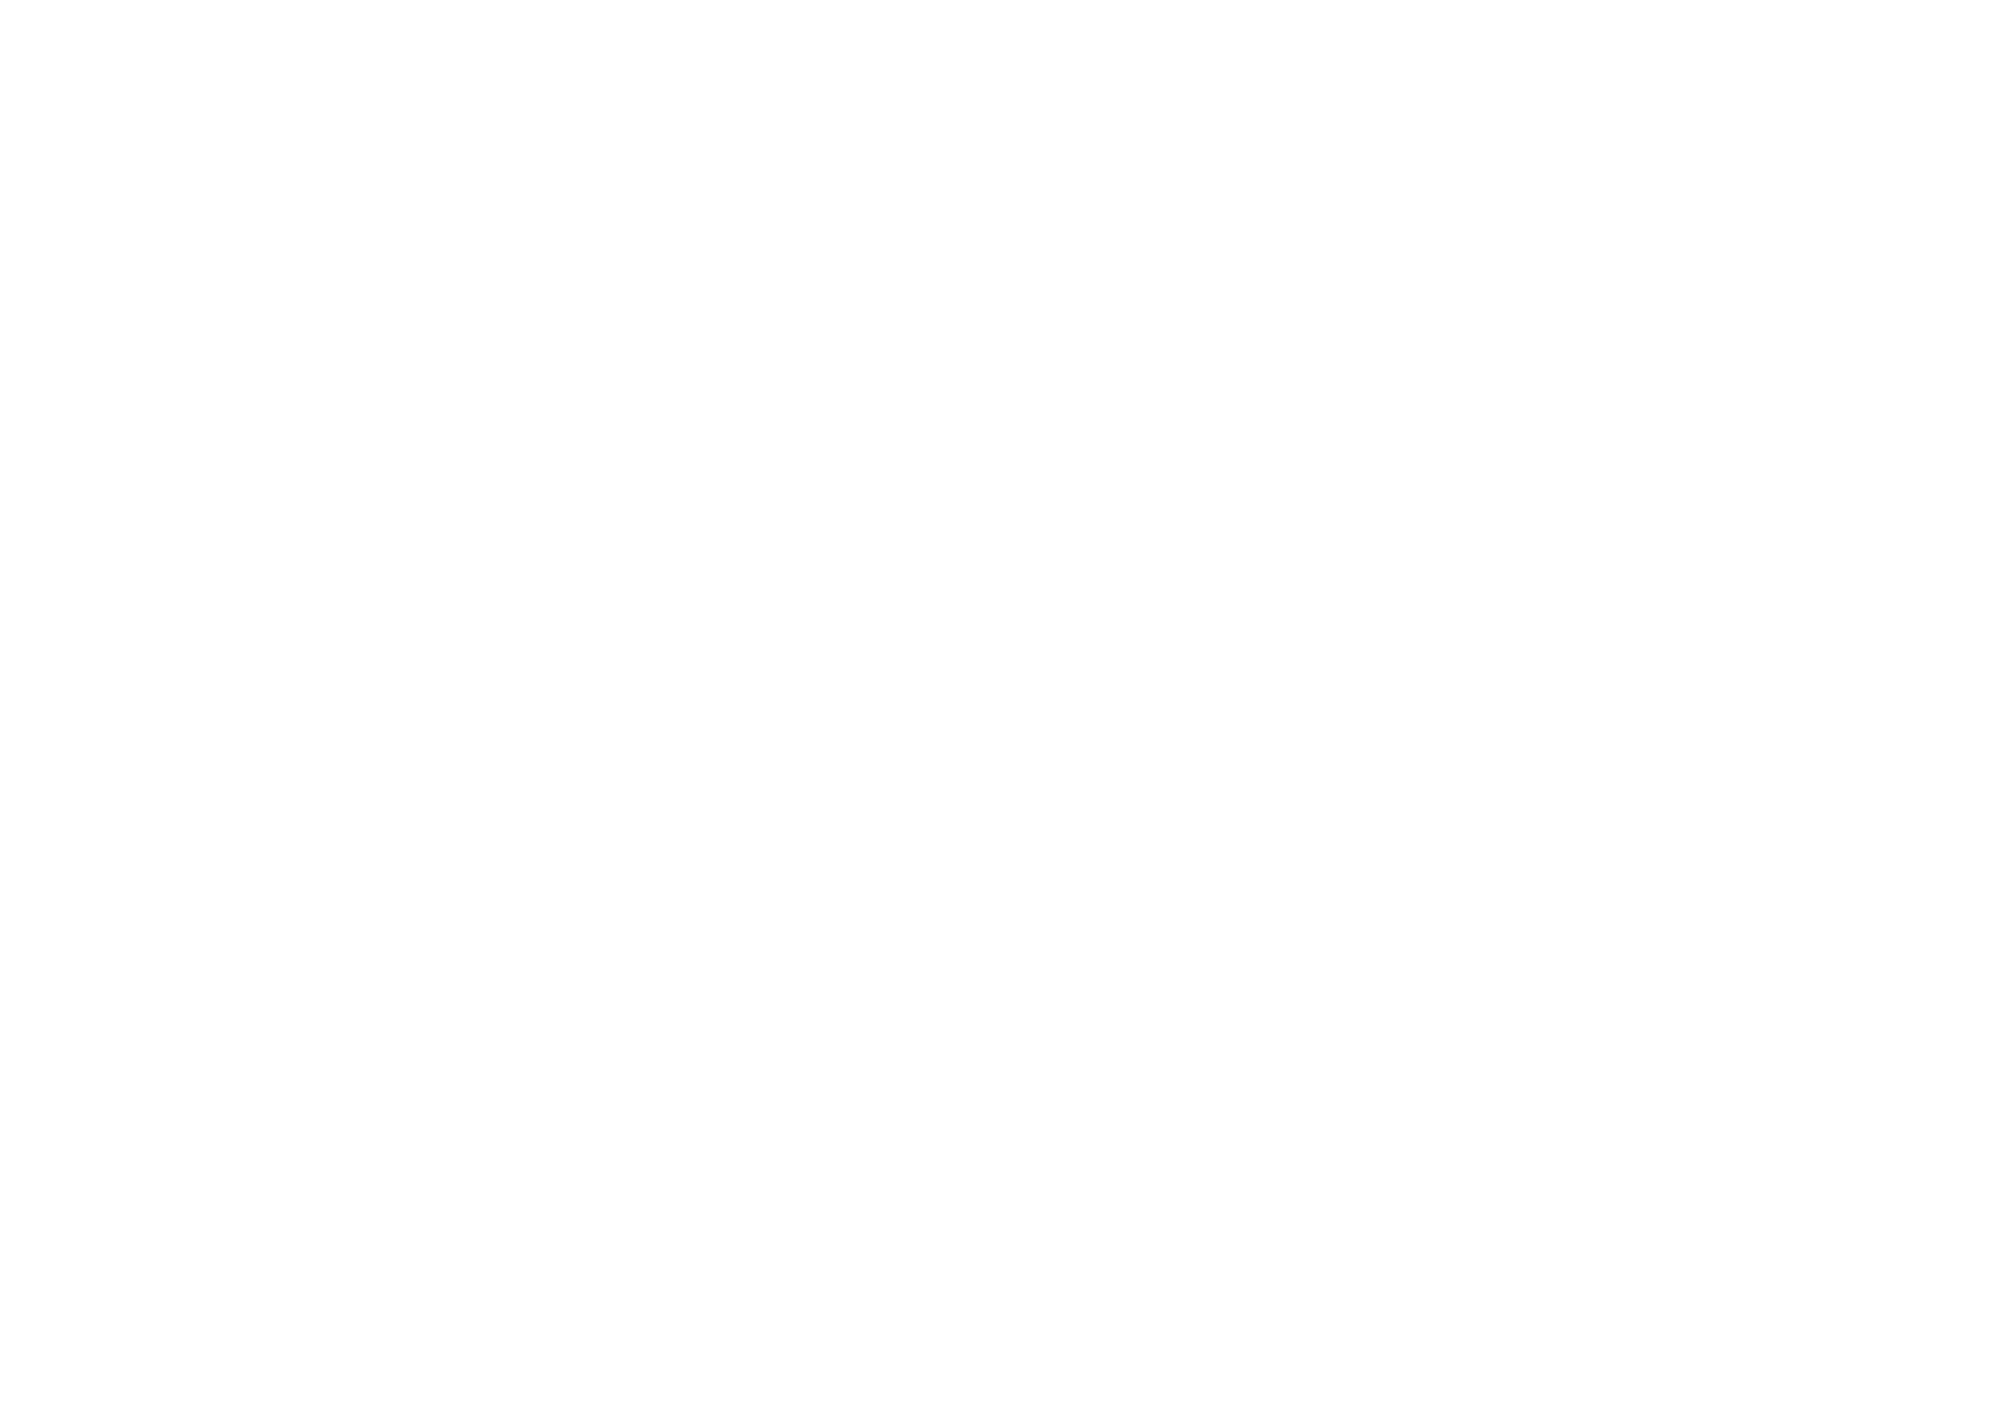 worldtravelstudy.com